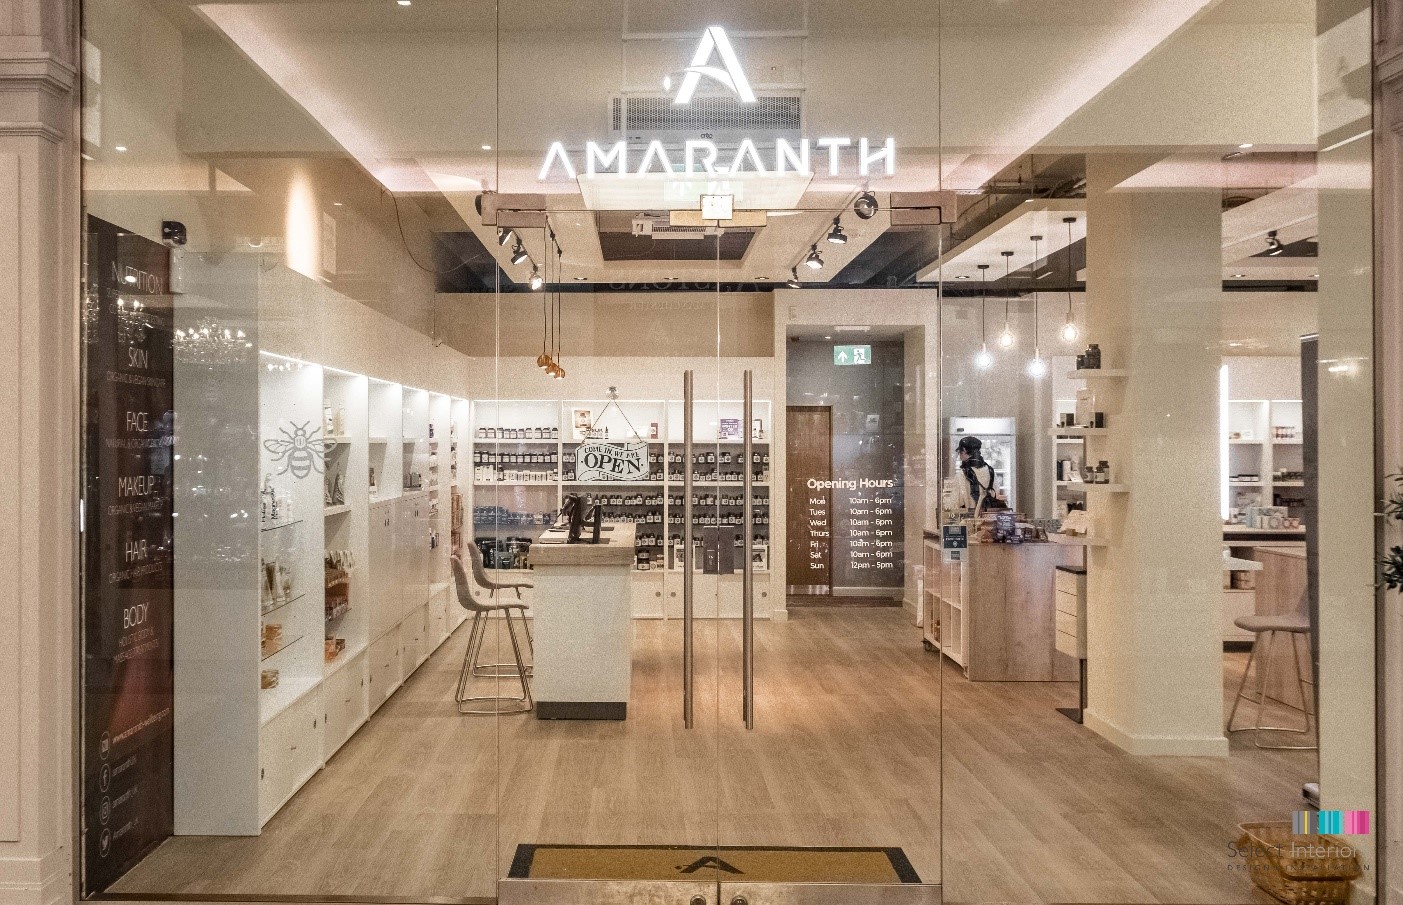 Amaranth interior project